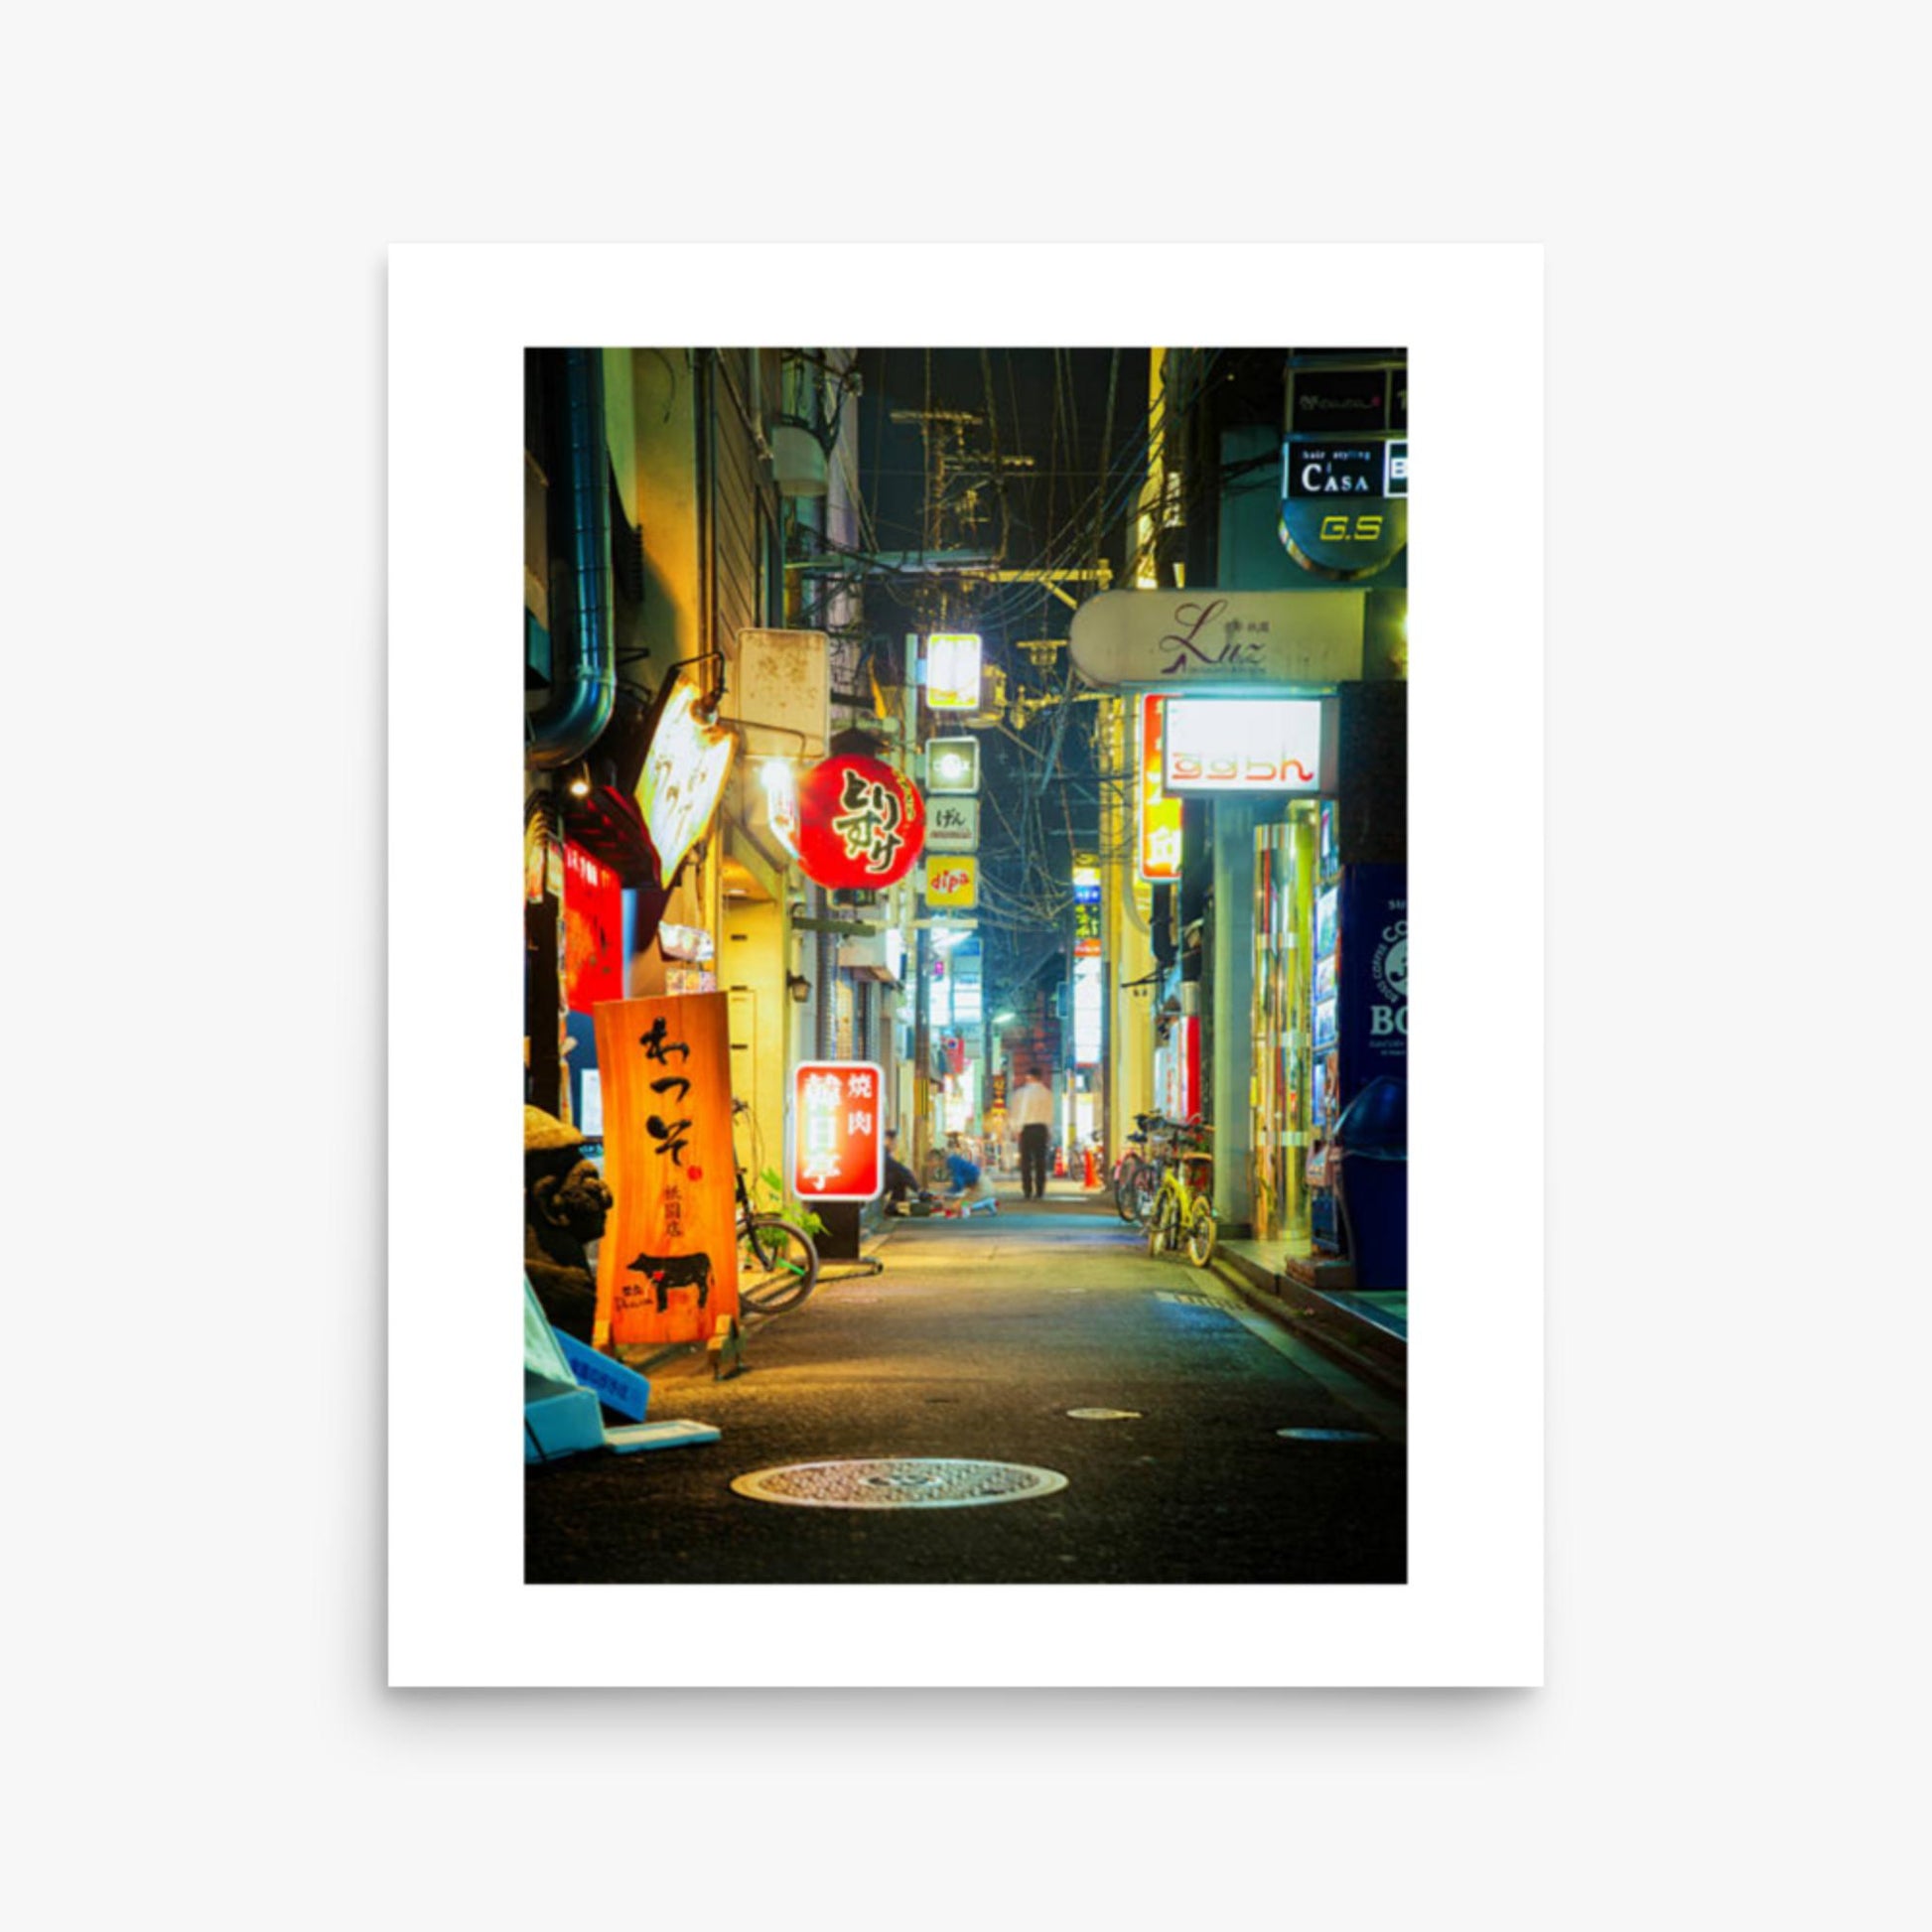 Kyoto, Japan backstreet at night 16x20 in Poster